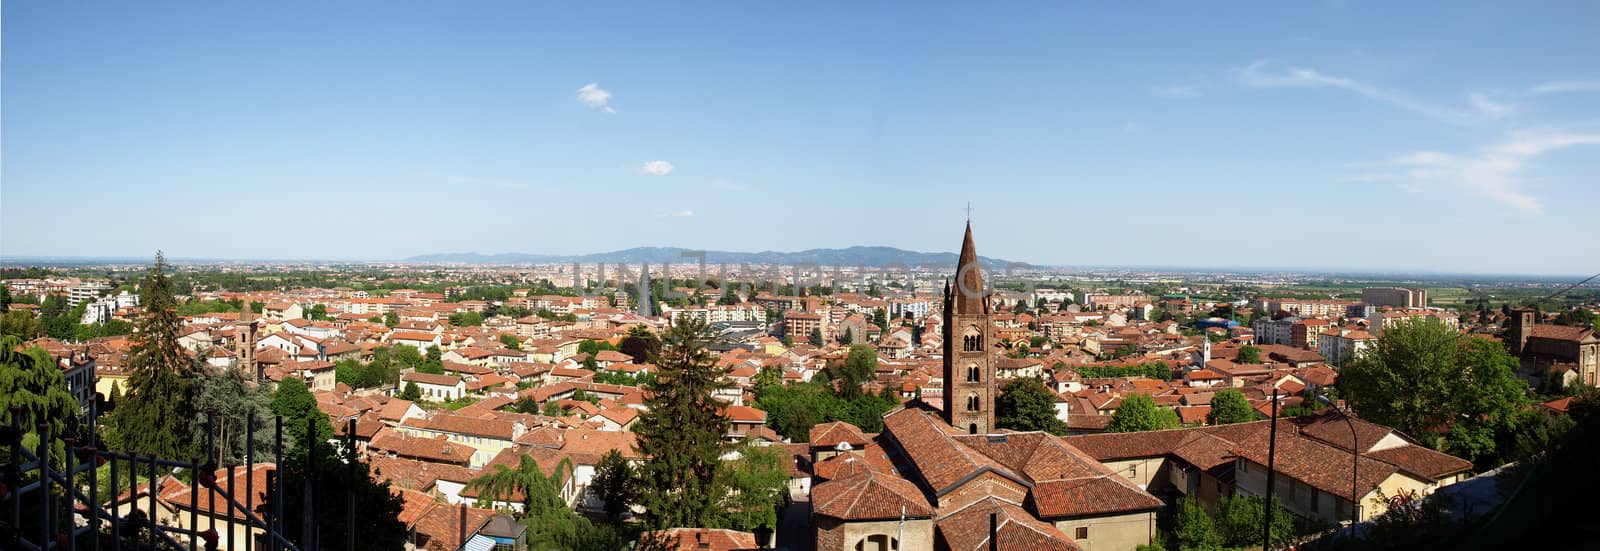 Turin panorama by claudiodivizia